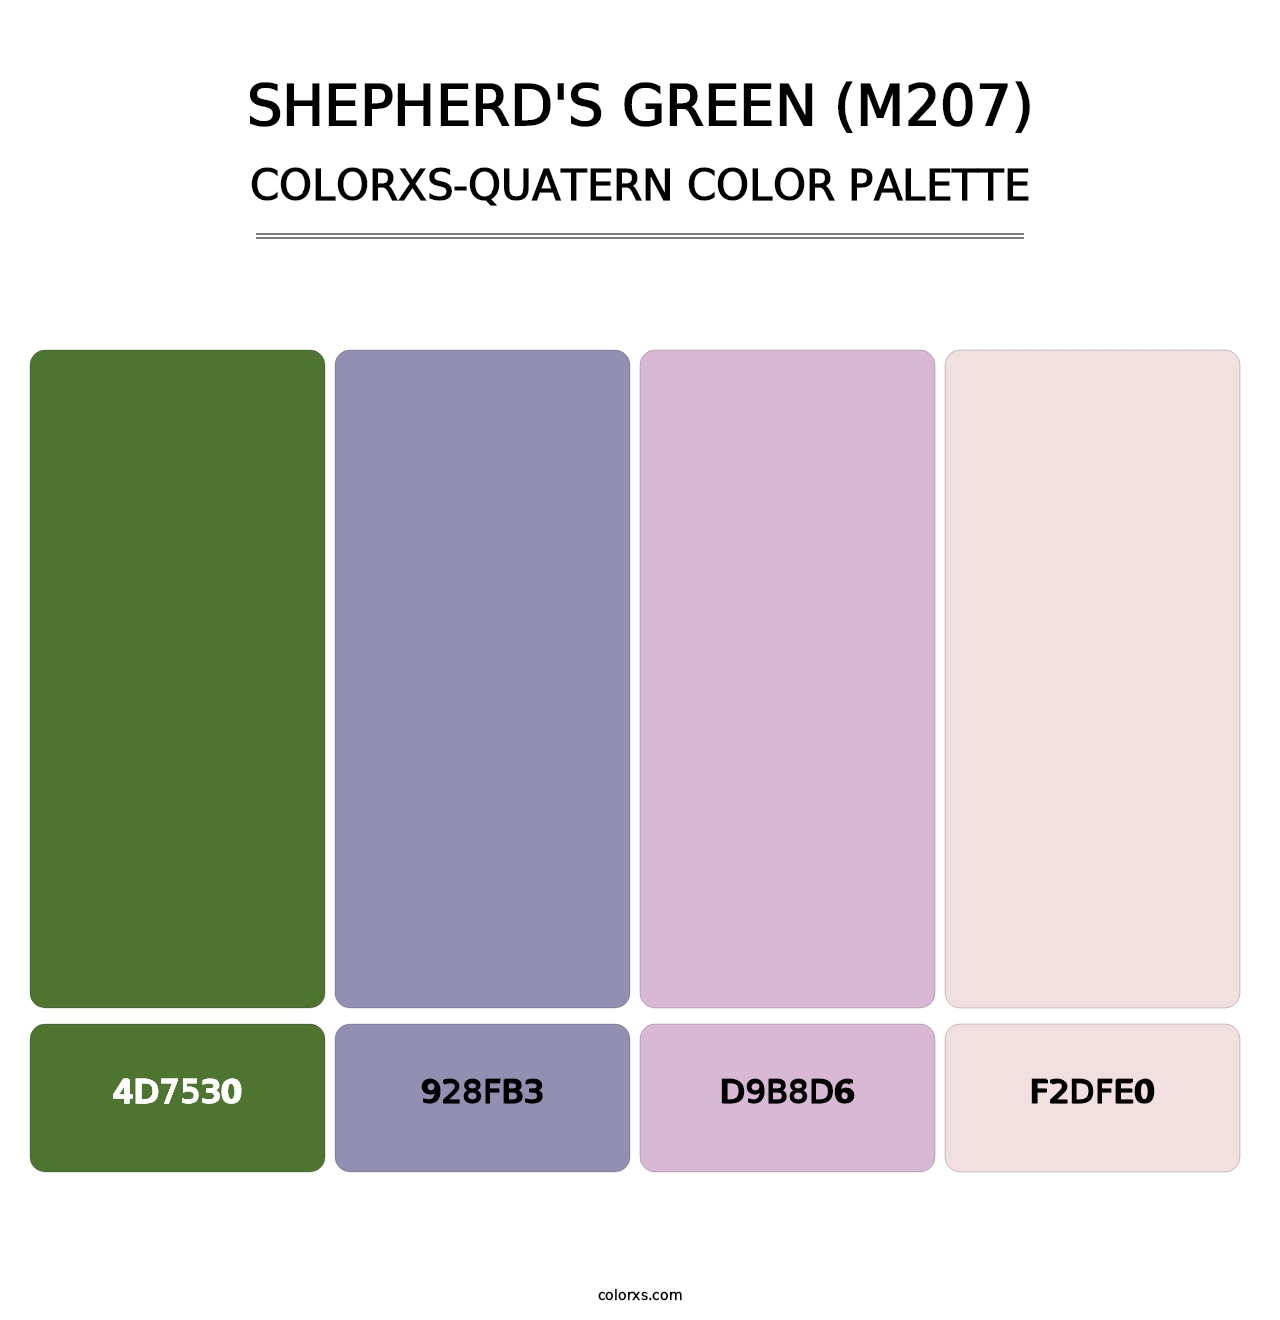 Shepherd's Green (M207) - Colorxs Quatern Palette